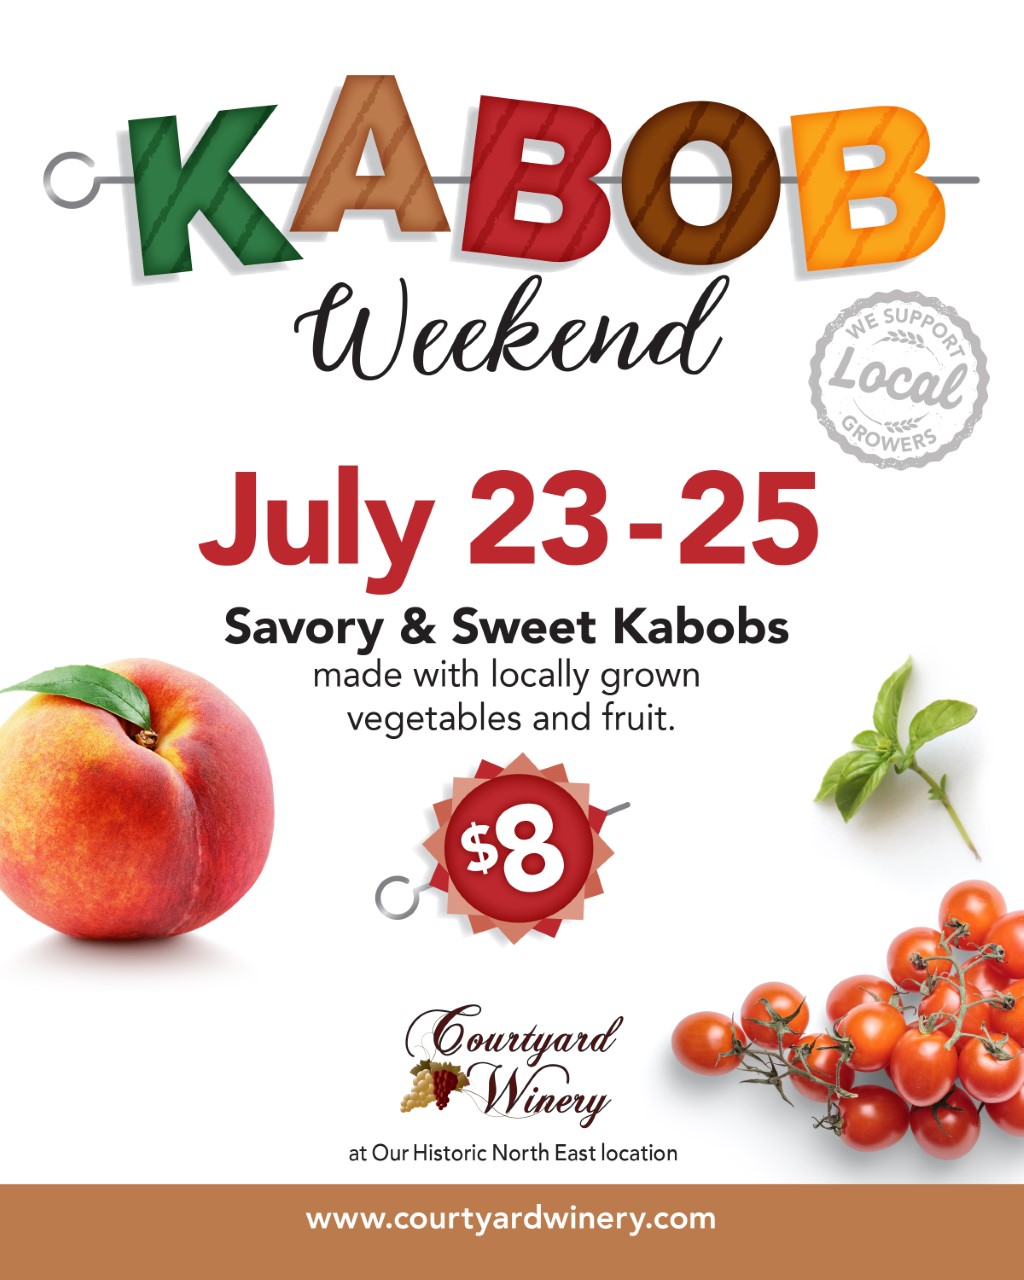 Courtyard Winery presents Kabob Weekend!